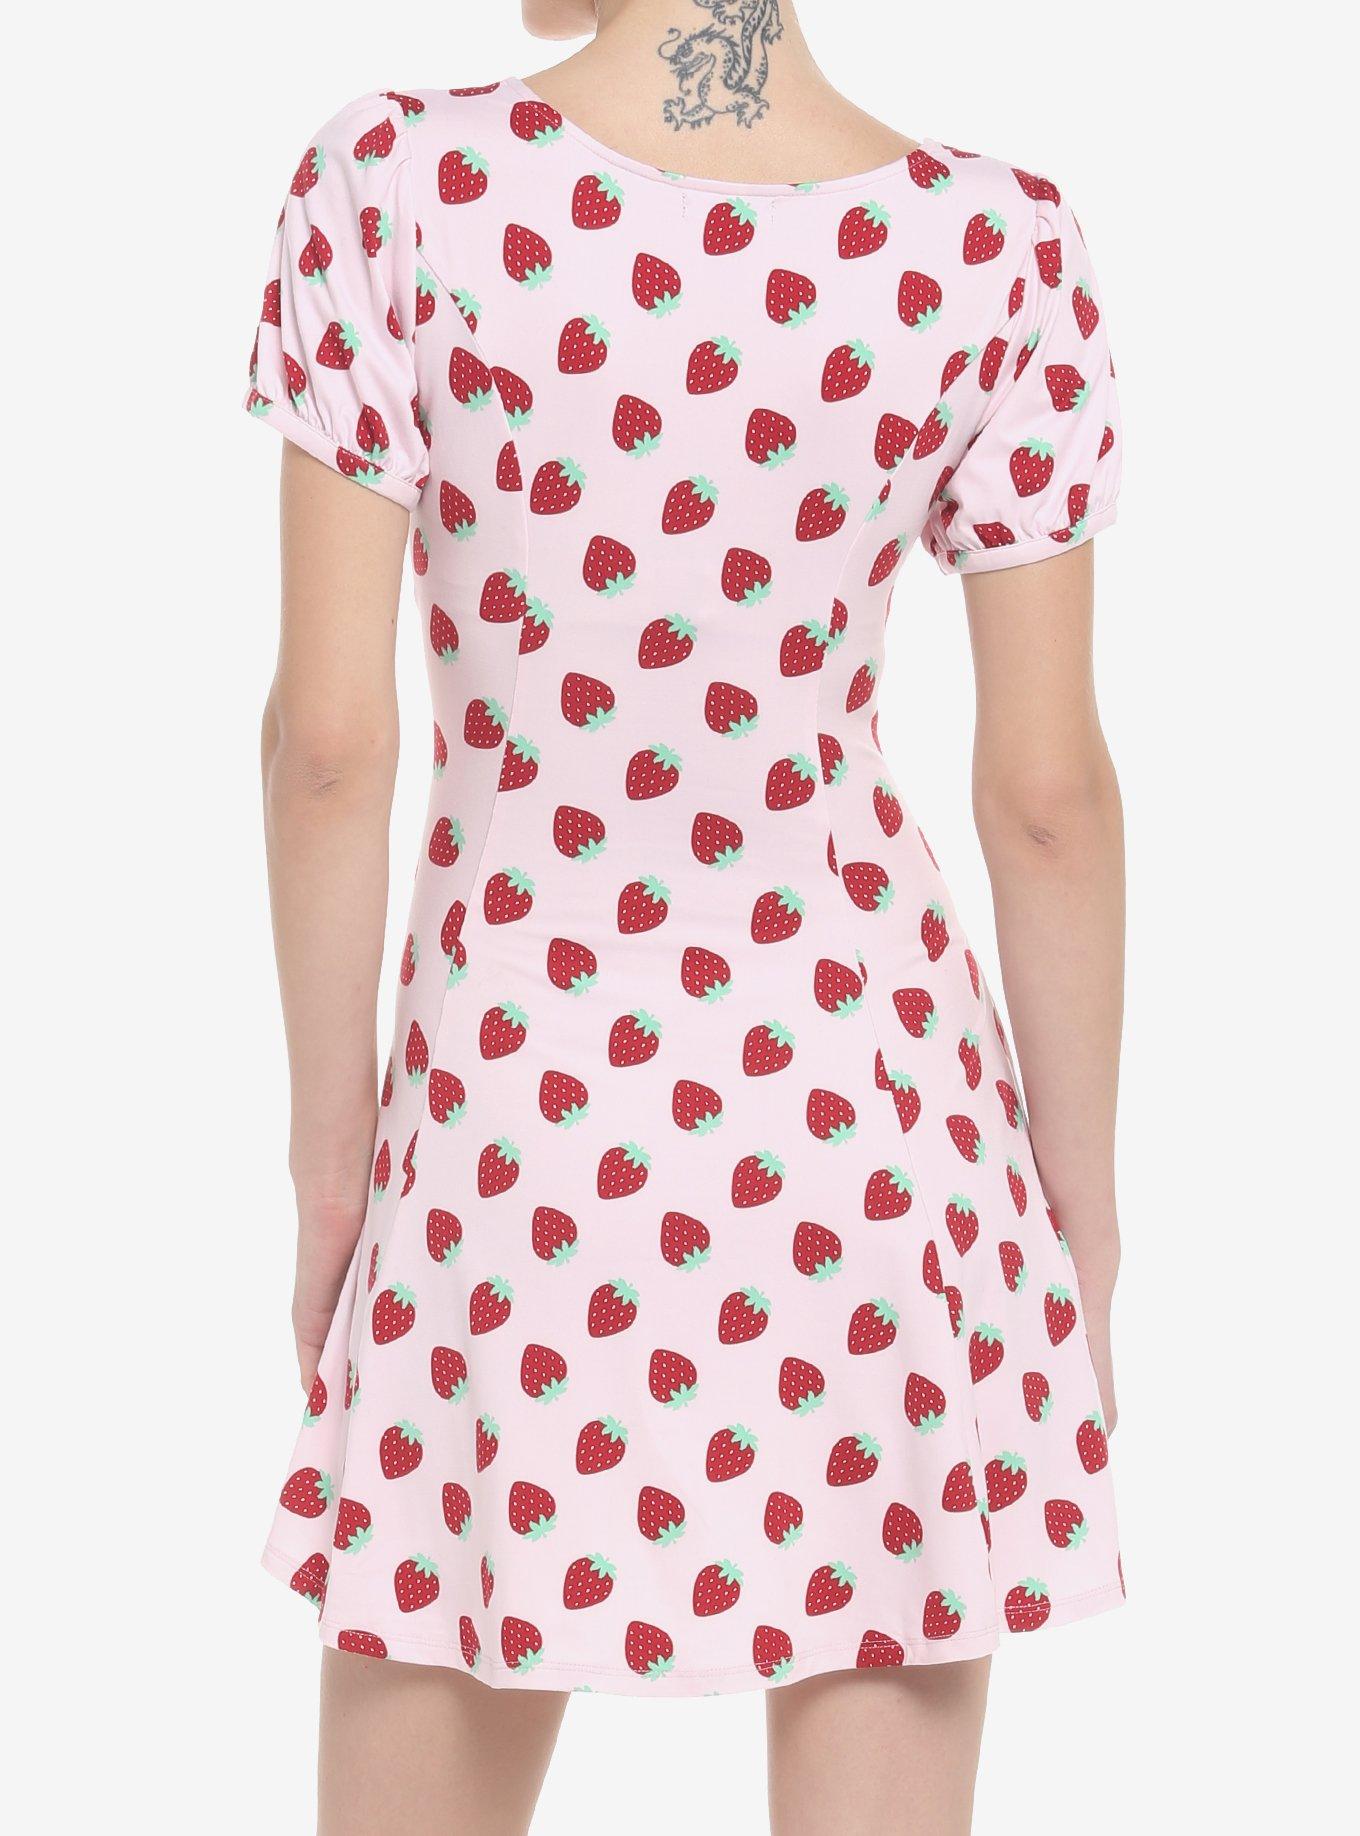 Strawberry Empire Waist Dress, PINK, alternate